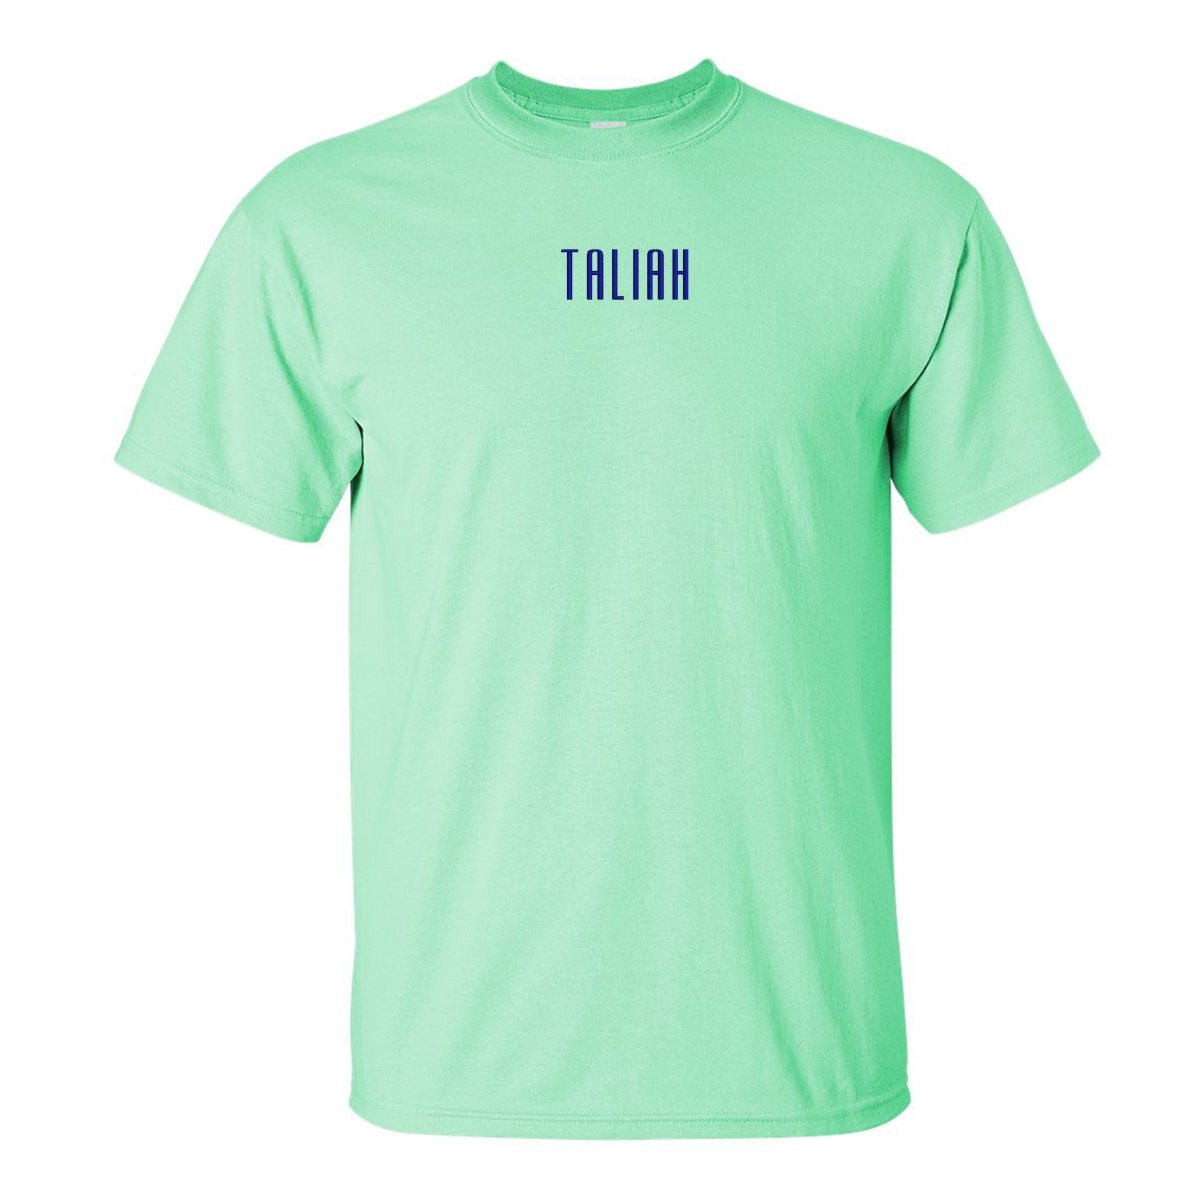 Make It Yours™ Basic T-Shirt - United Monograms